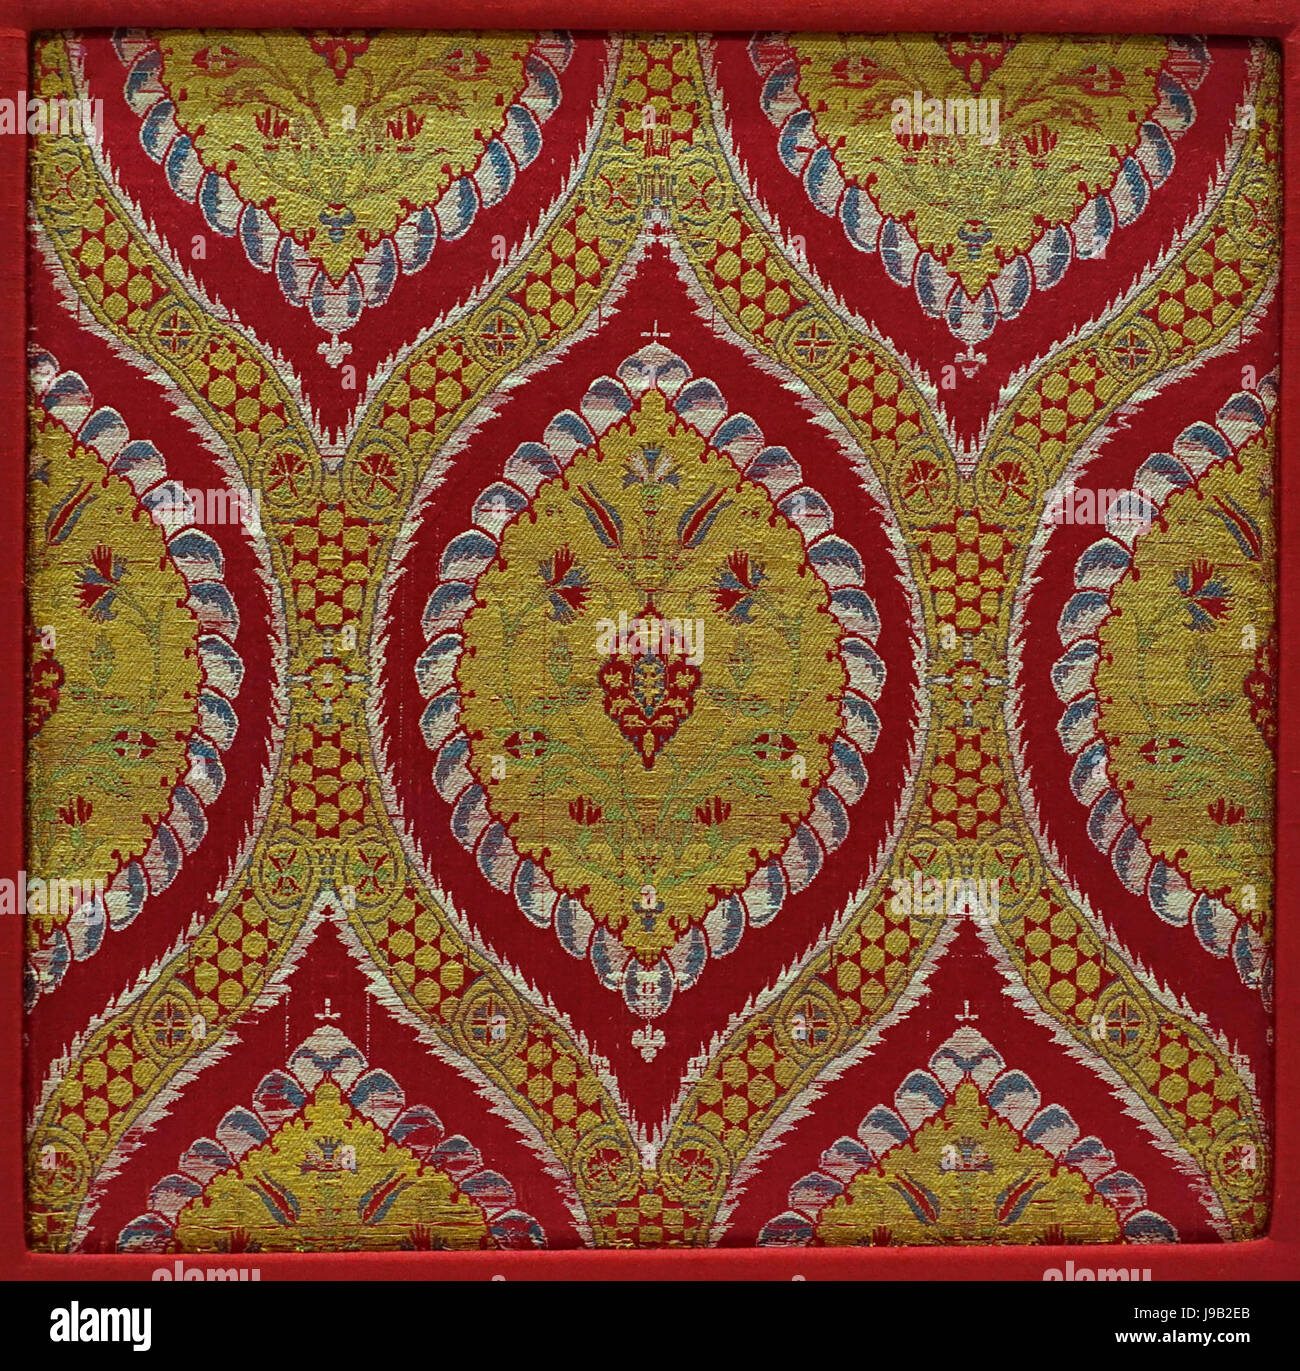 Fragmento textil otomano con bóvedas de patrón, probablemente, Estambul, Turquía, 1570 1580 AD, seda, hilo, lampas envuelta metálica (kemha) Museo Aga Khan en Toronto, Canadá DSC06833 Foto de stock